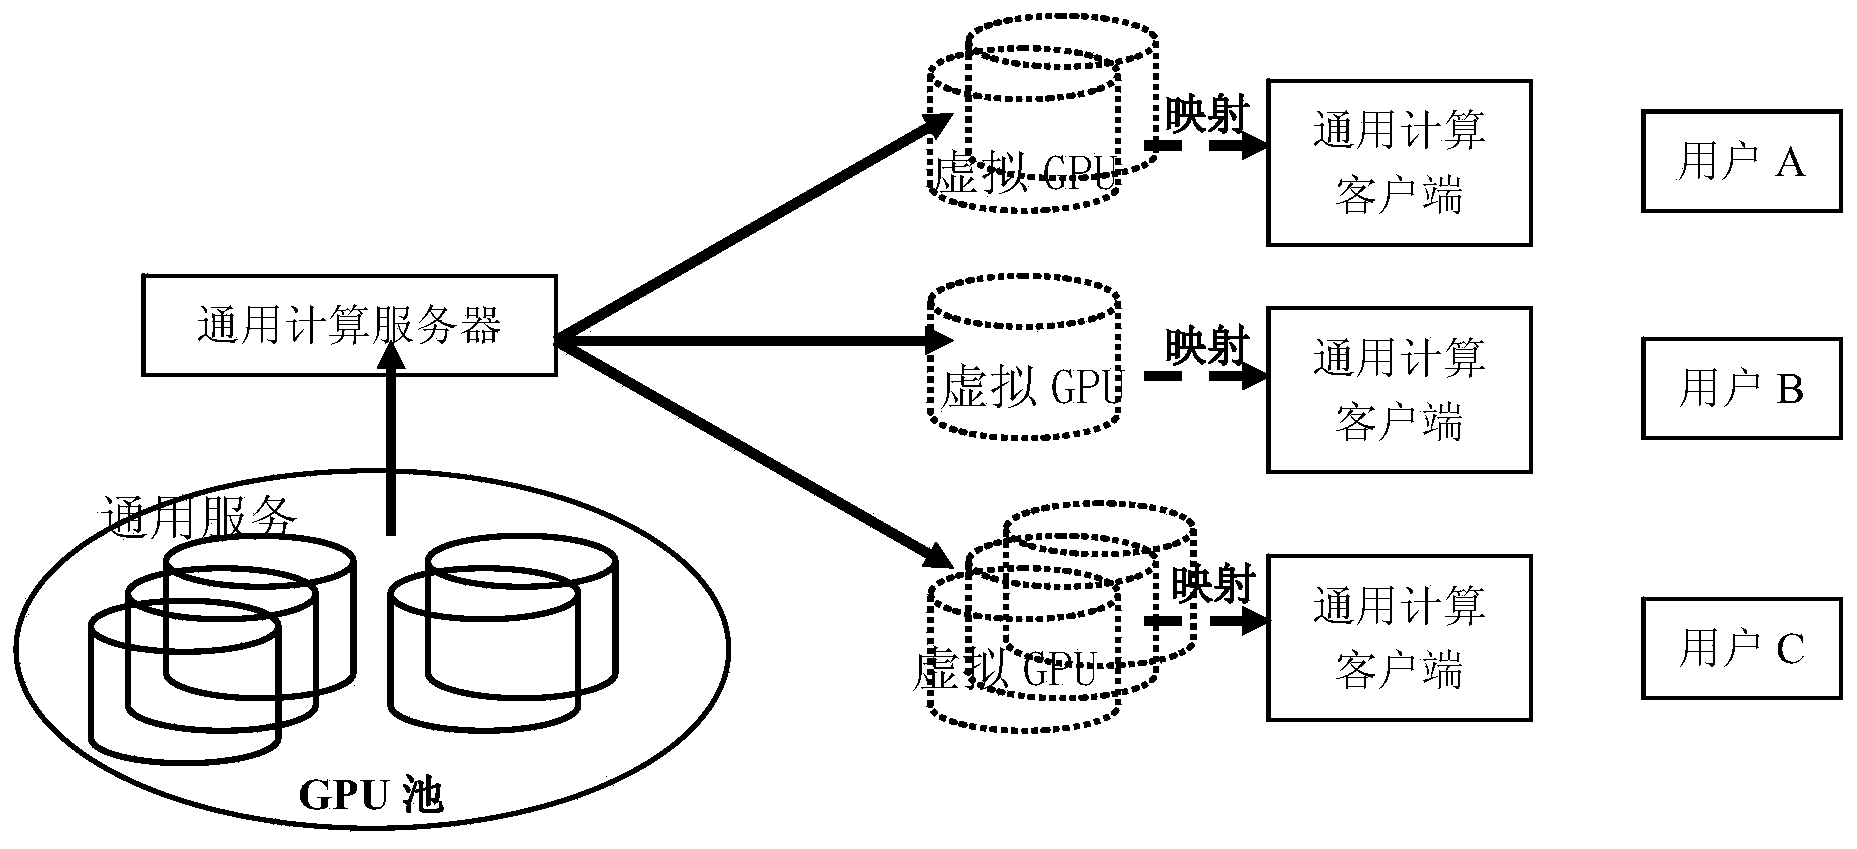 General purpose computation virtualization implementation method based on dynamic library interception